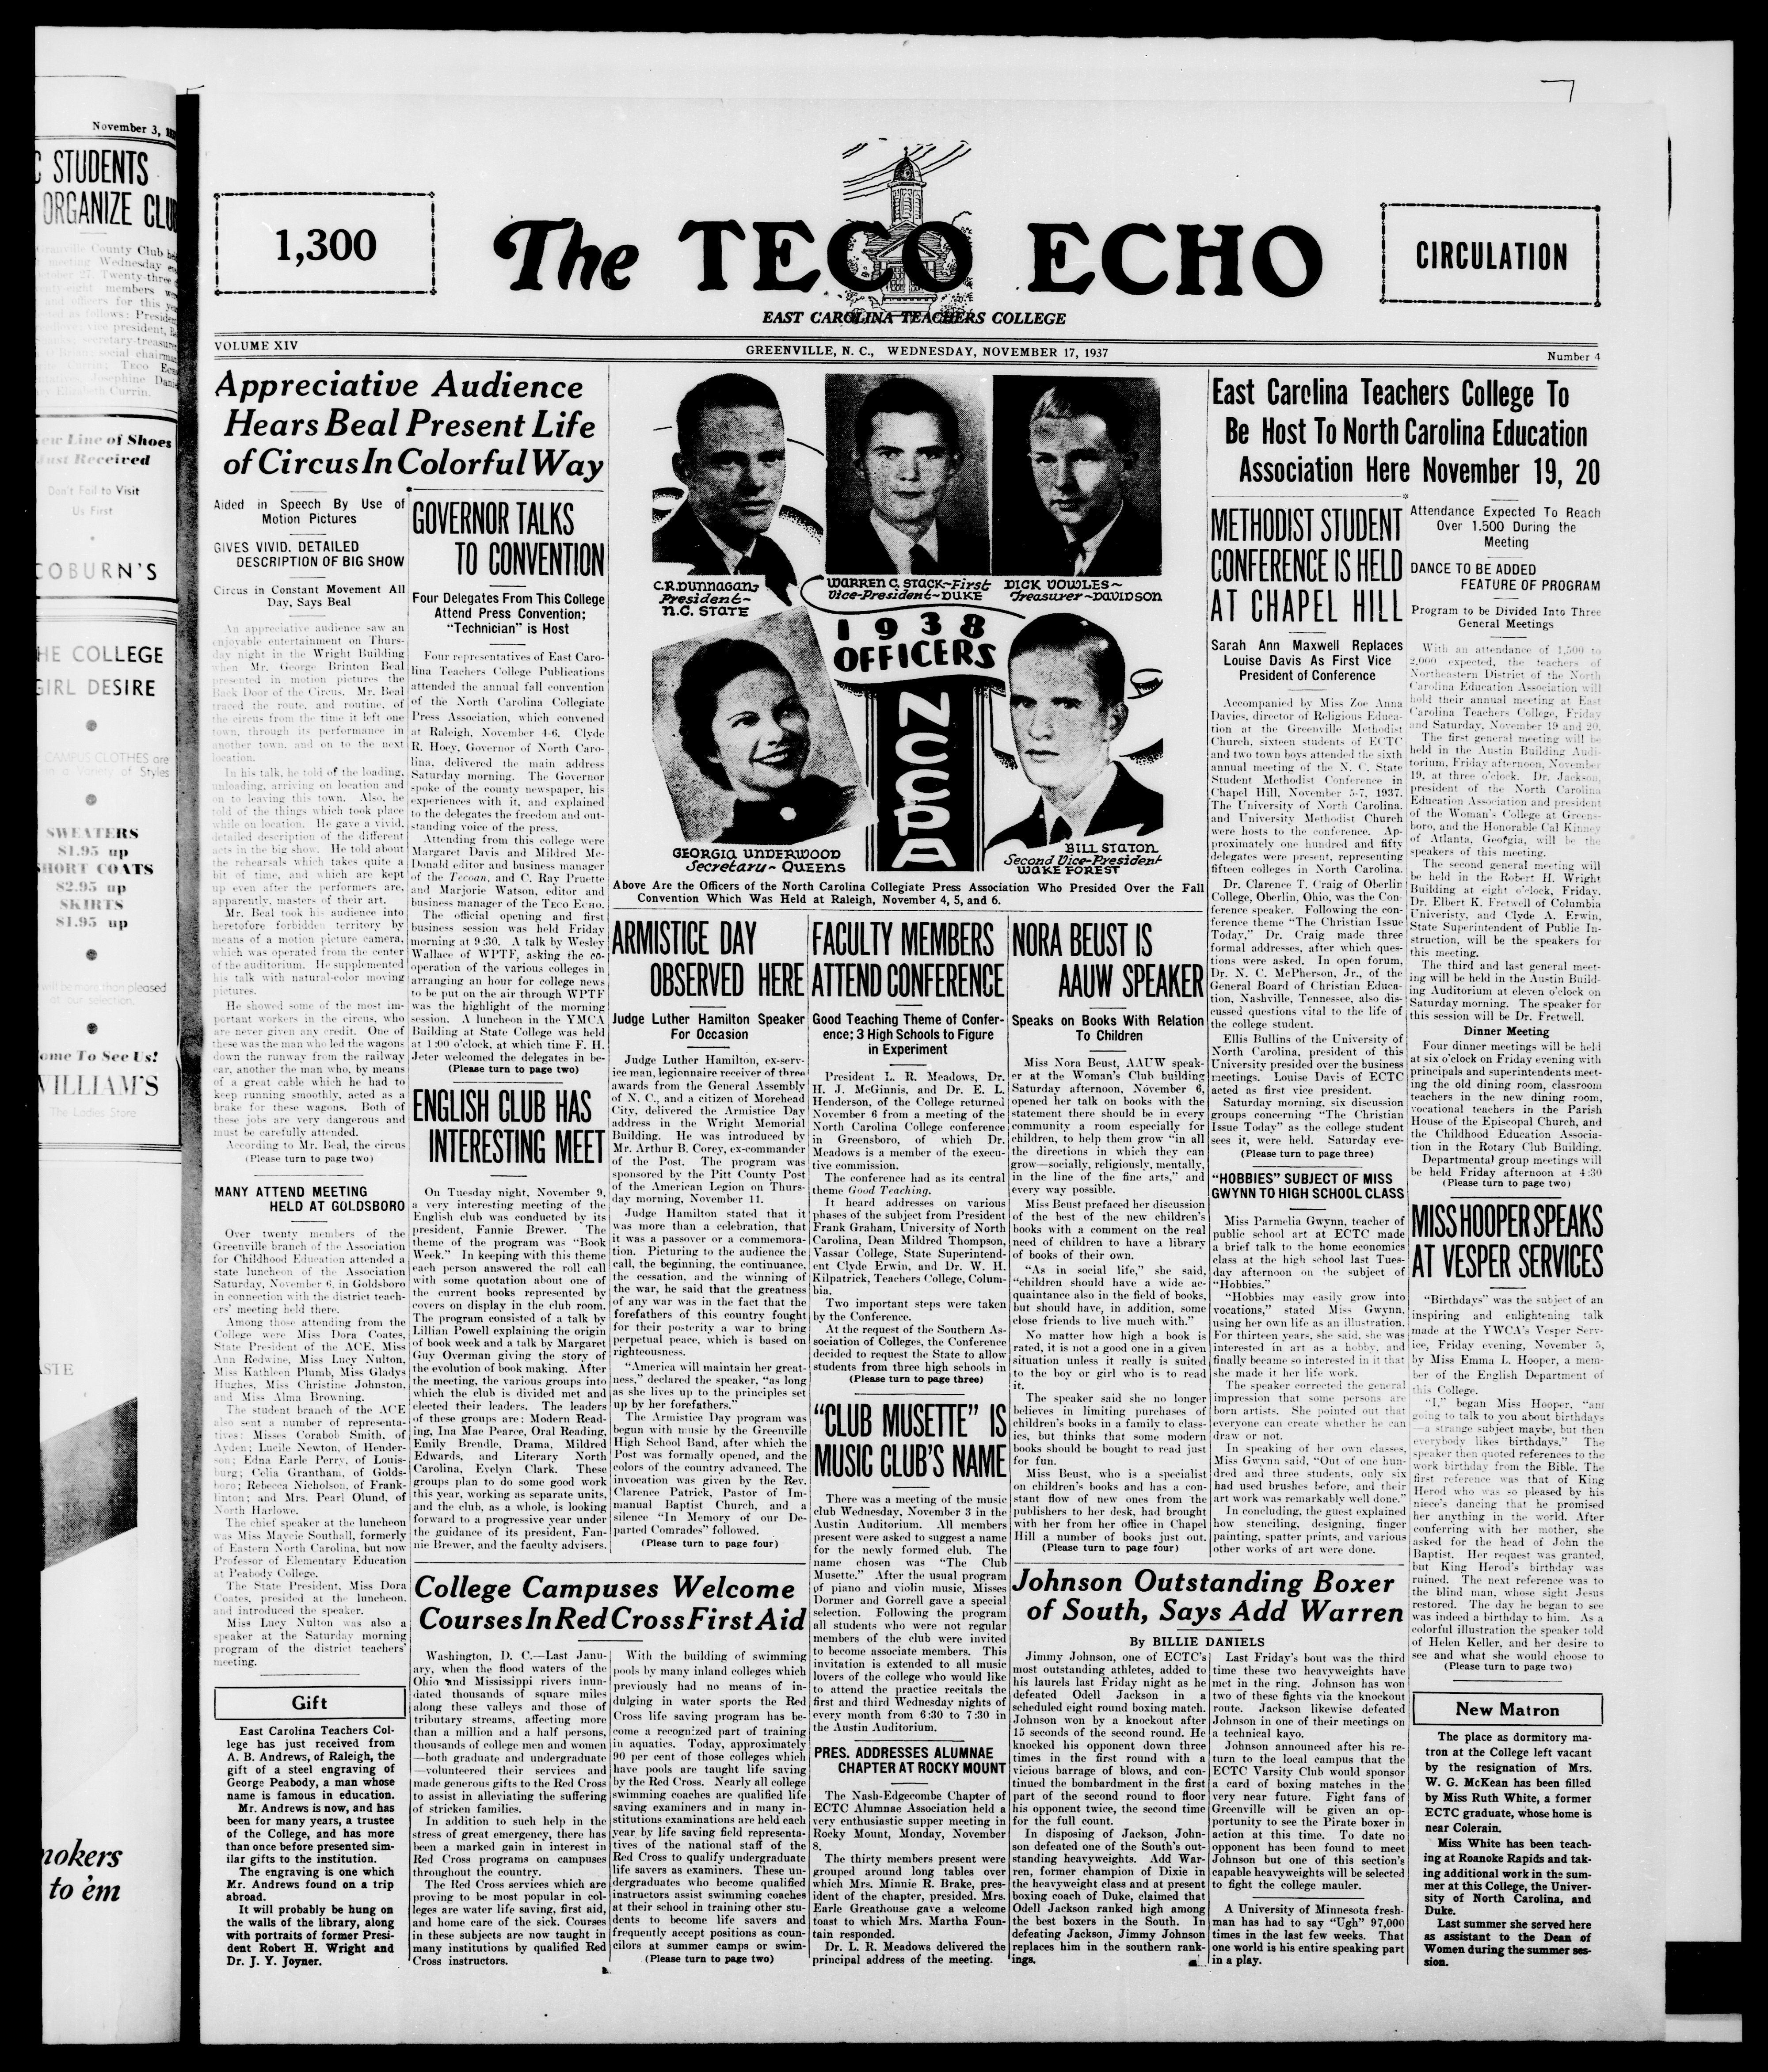 The Teco Echo, November 17, 1937 pic